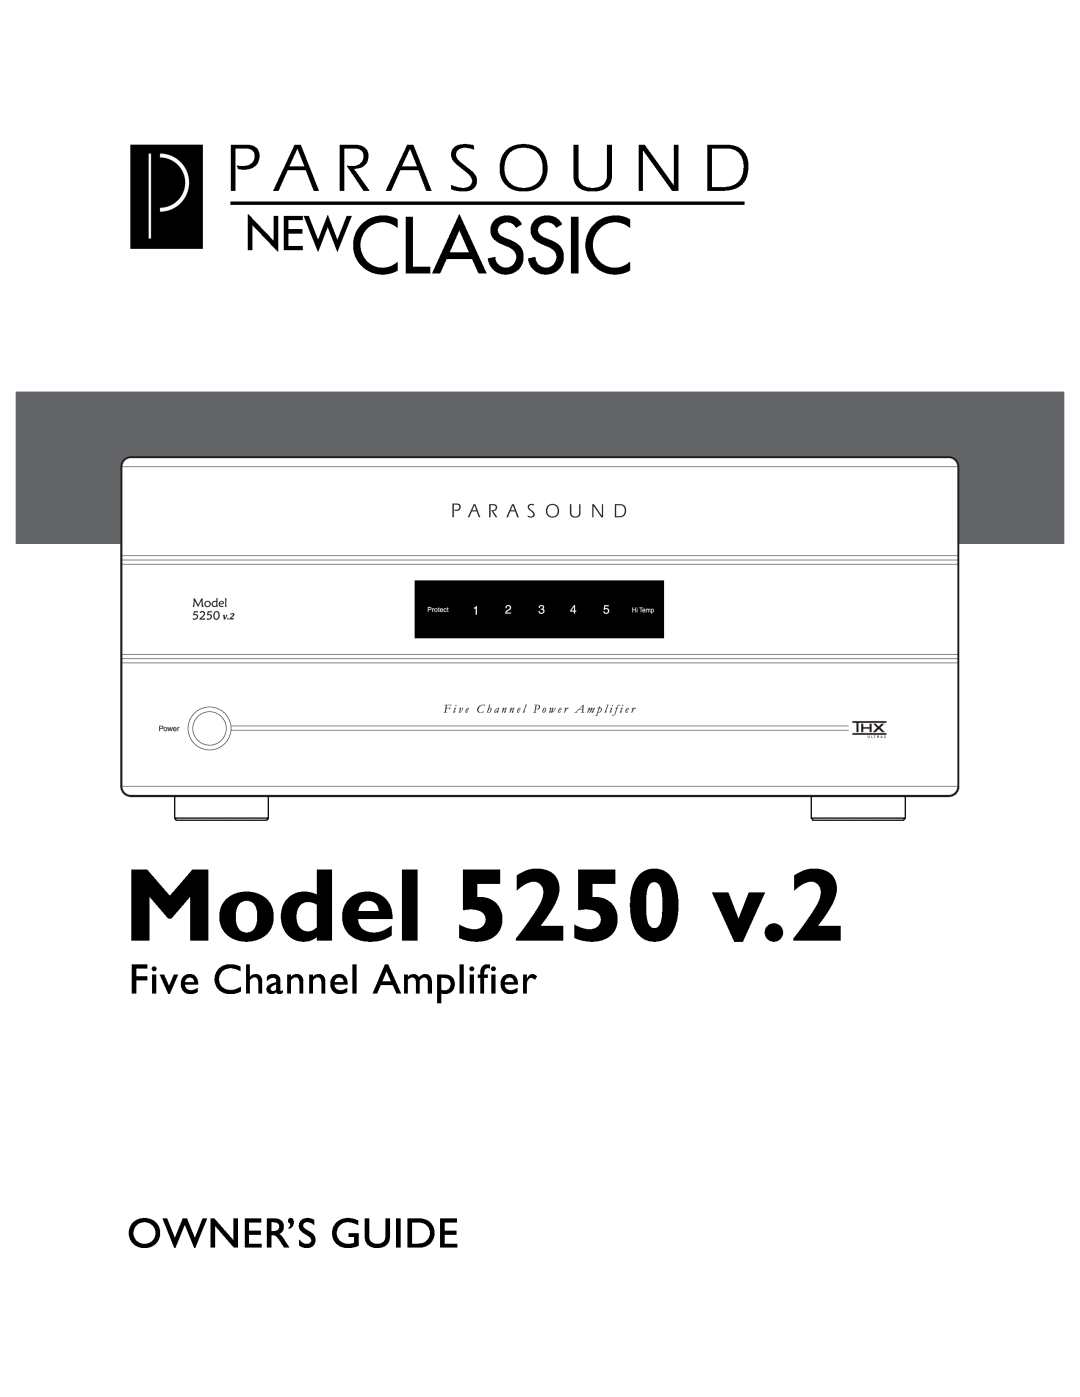 Parasound 5250 V.2 manual Model, Five Channel Amplifier 